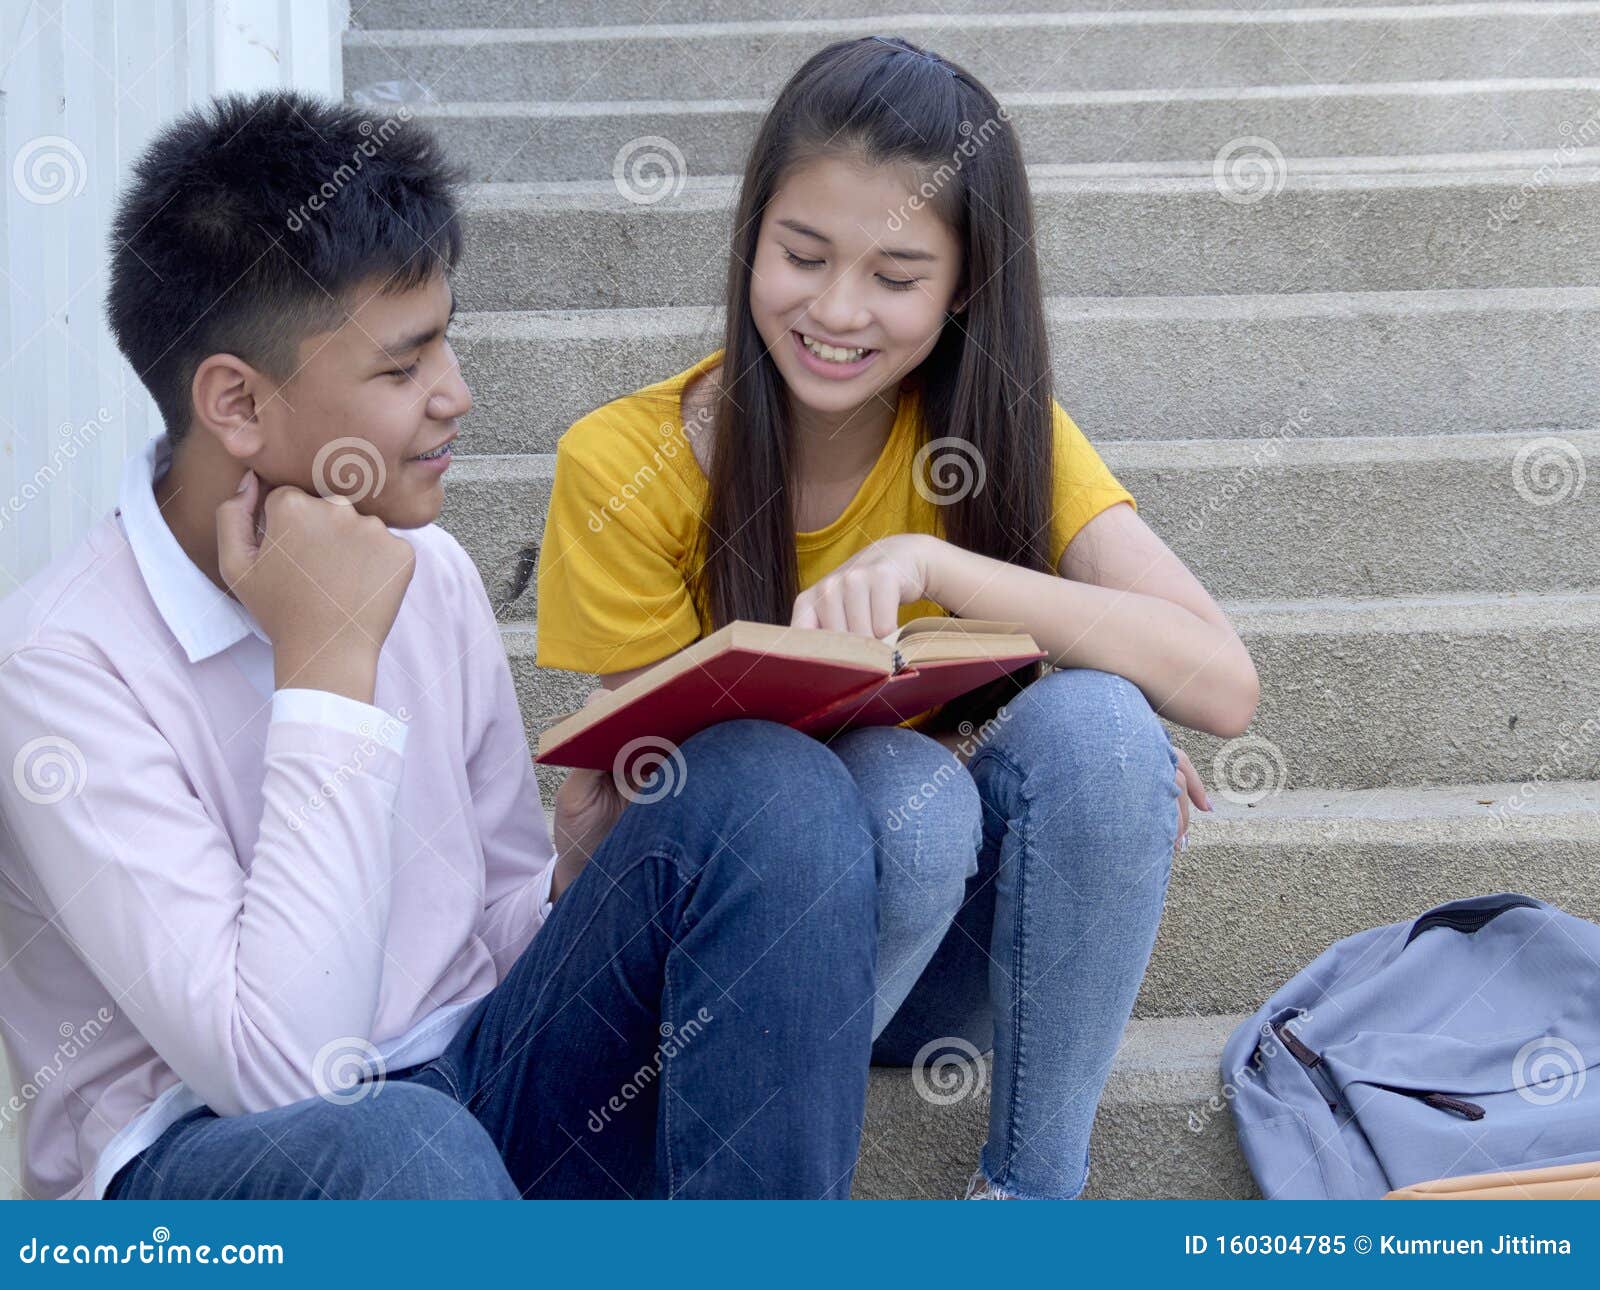 young-couple-sitting-stairs-school-teens-men-women-outdoor-backpacks-160304785.jpg